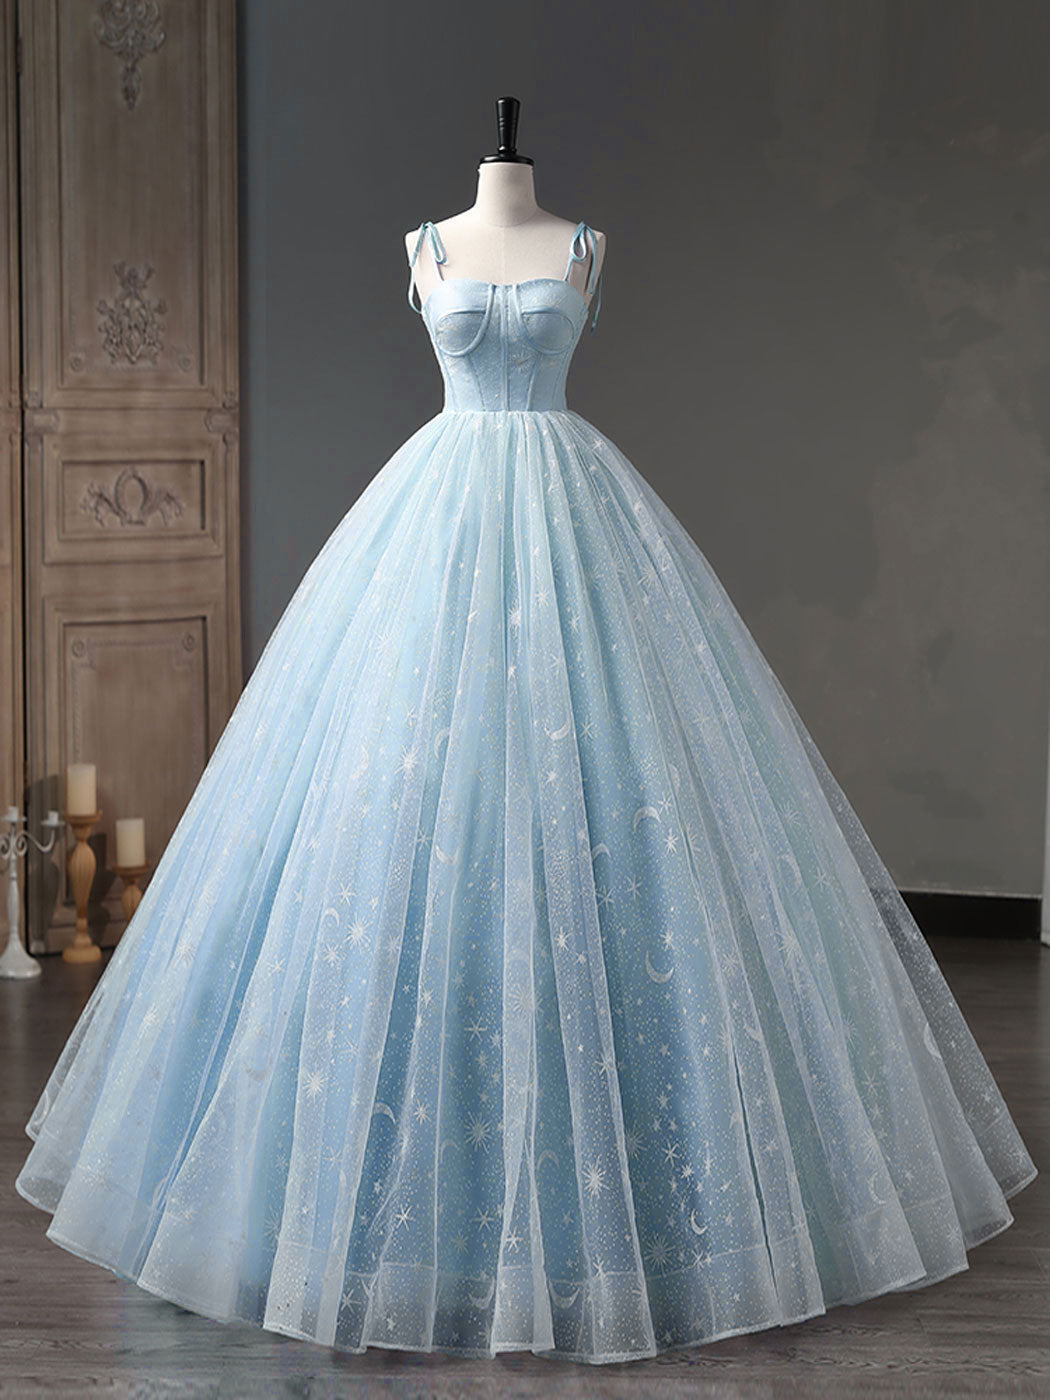 blue gown dress